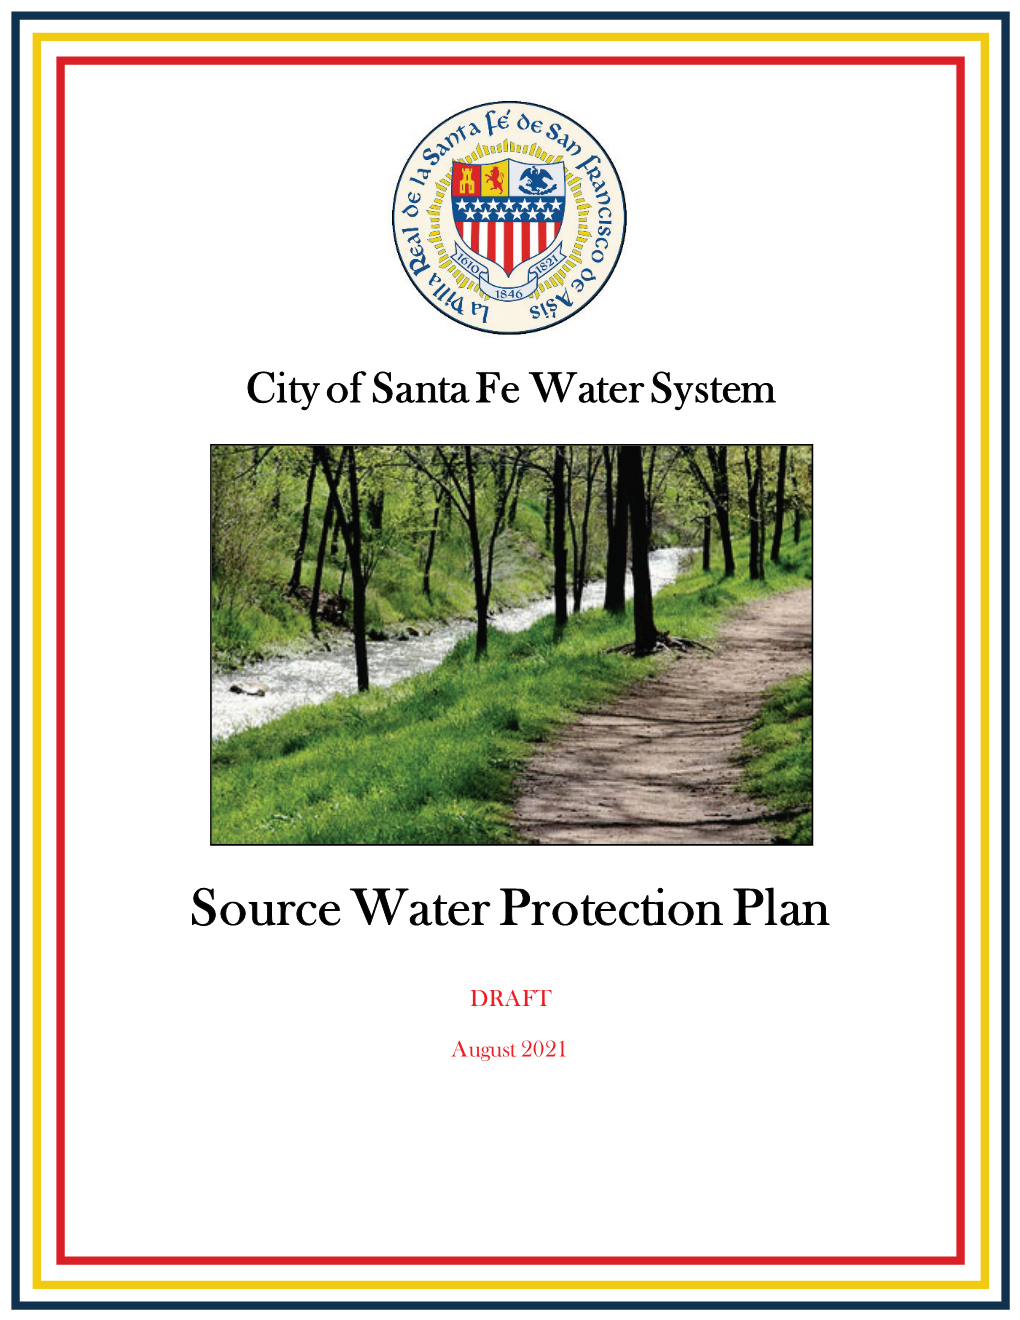 DRAFT Source Water Protection Plan